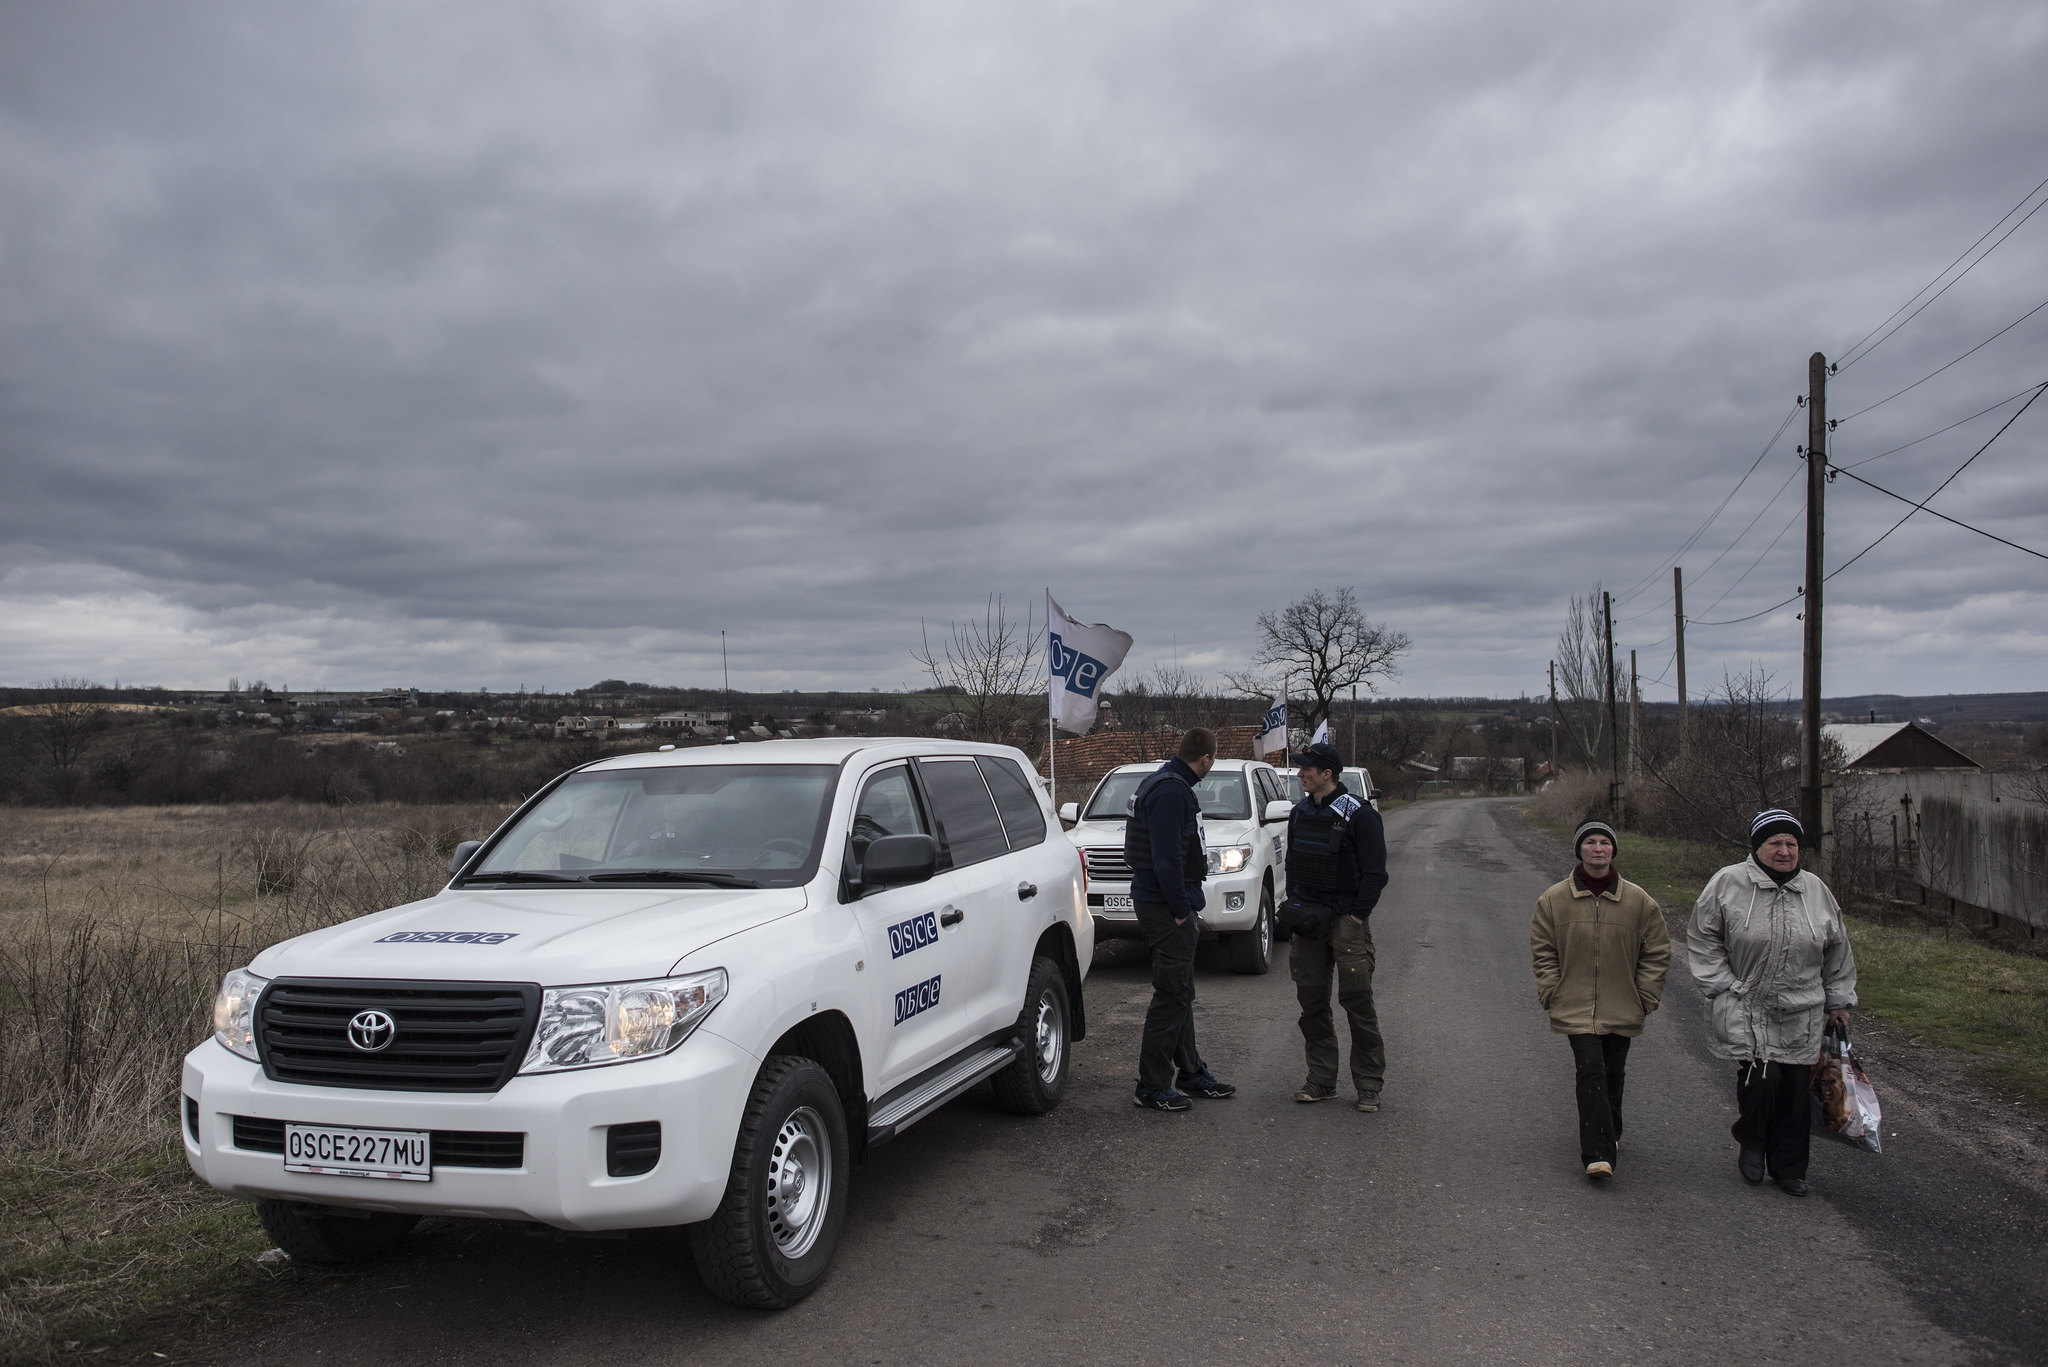 Russian hybrid forces block OSCE monitors inside base, demanding Ukraine release their spy